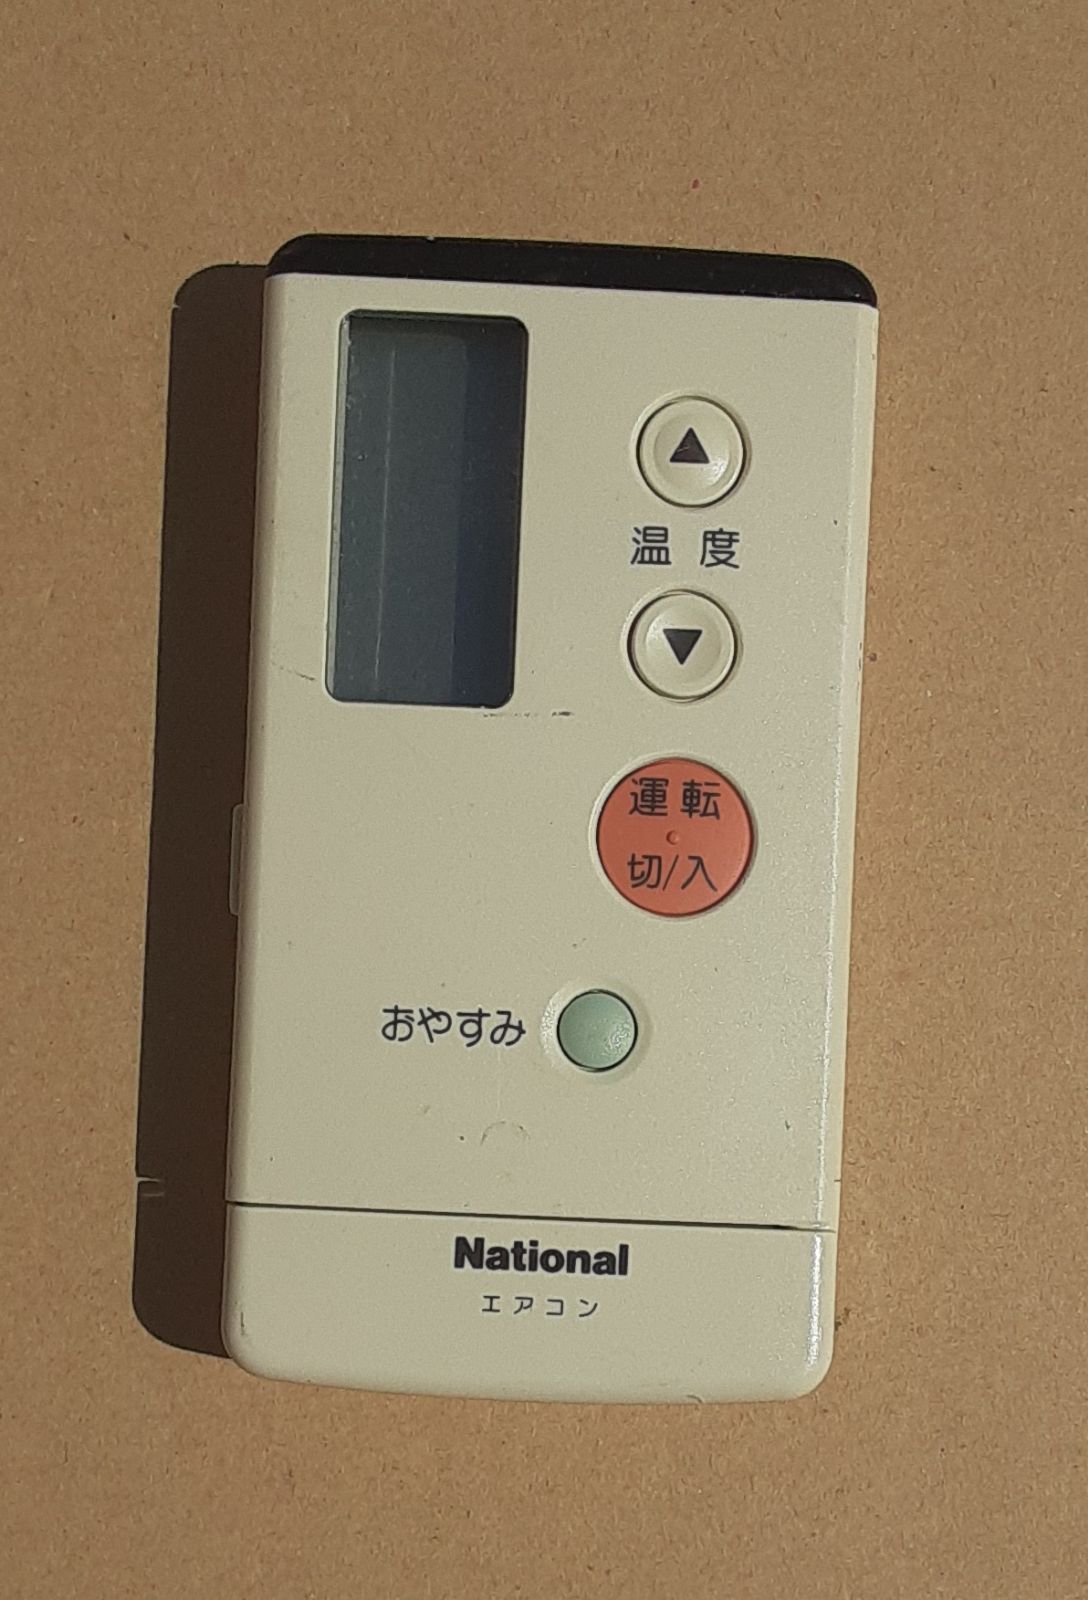 Nationalエアコン用リモコン - 空調